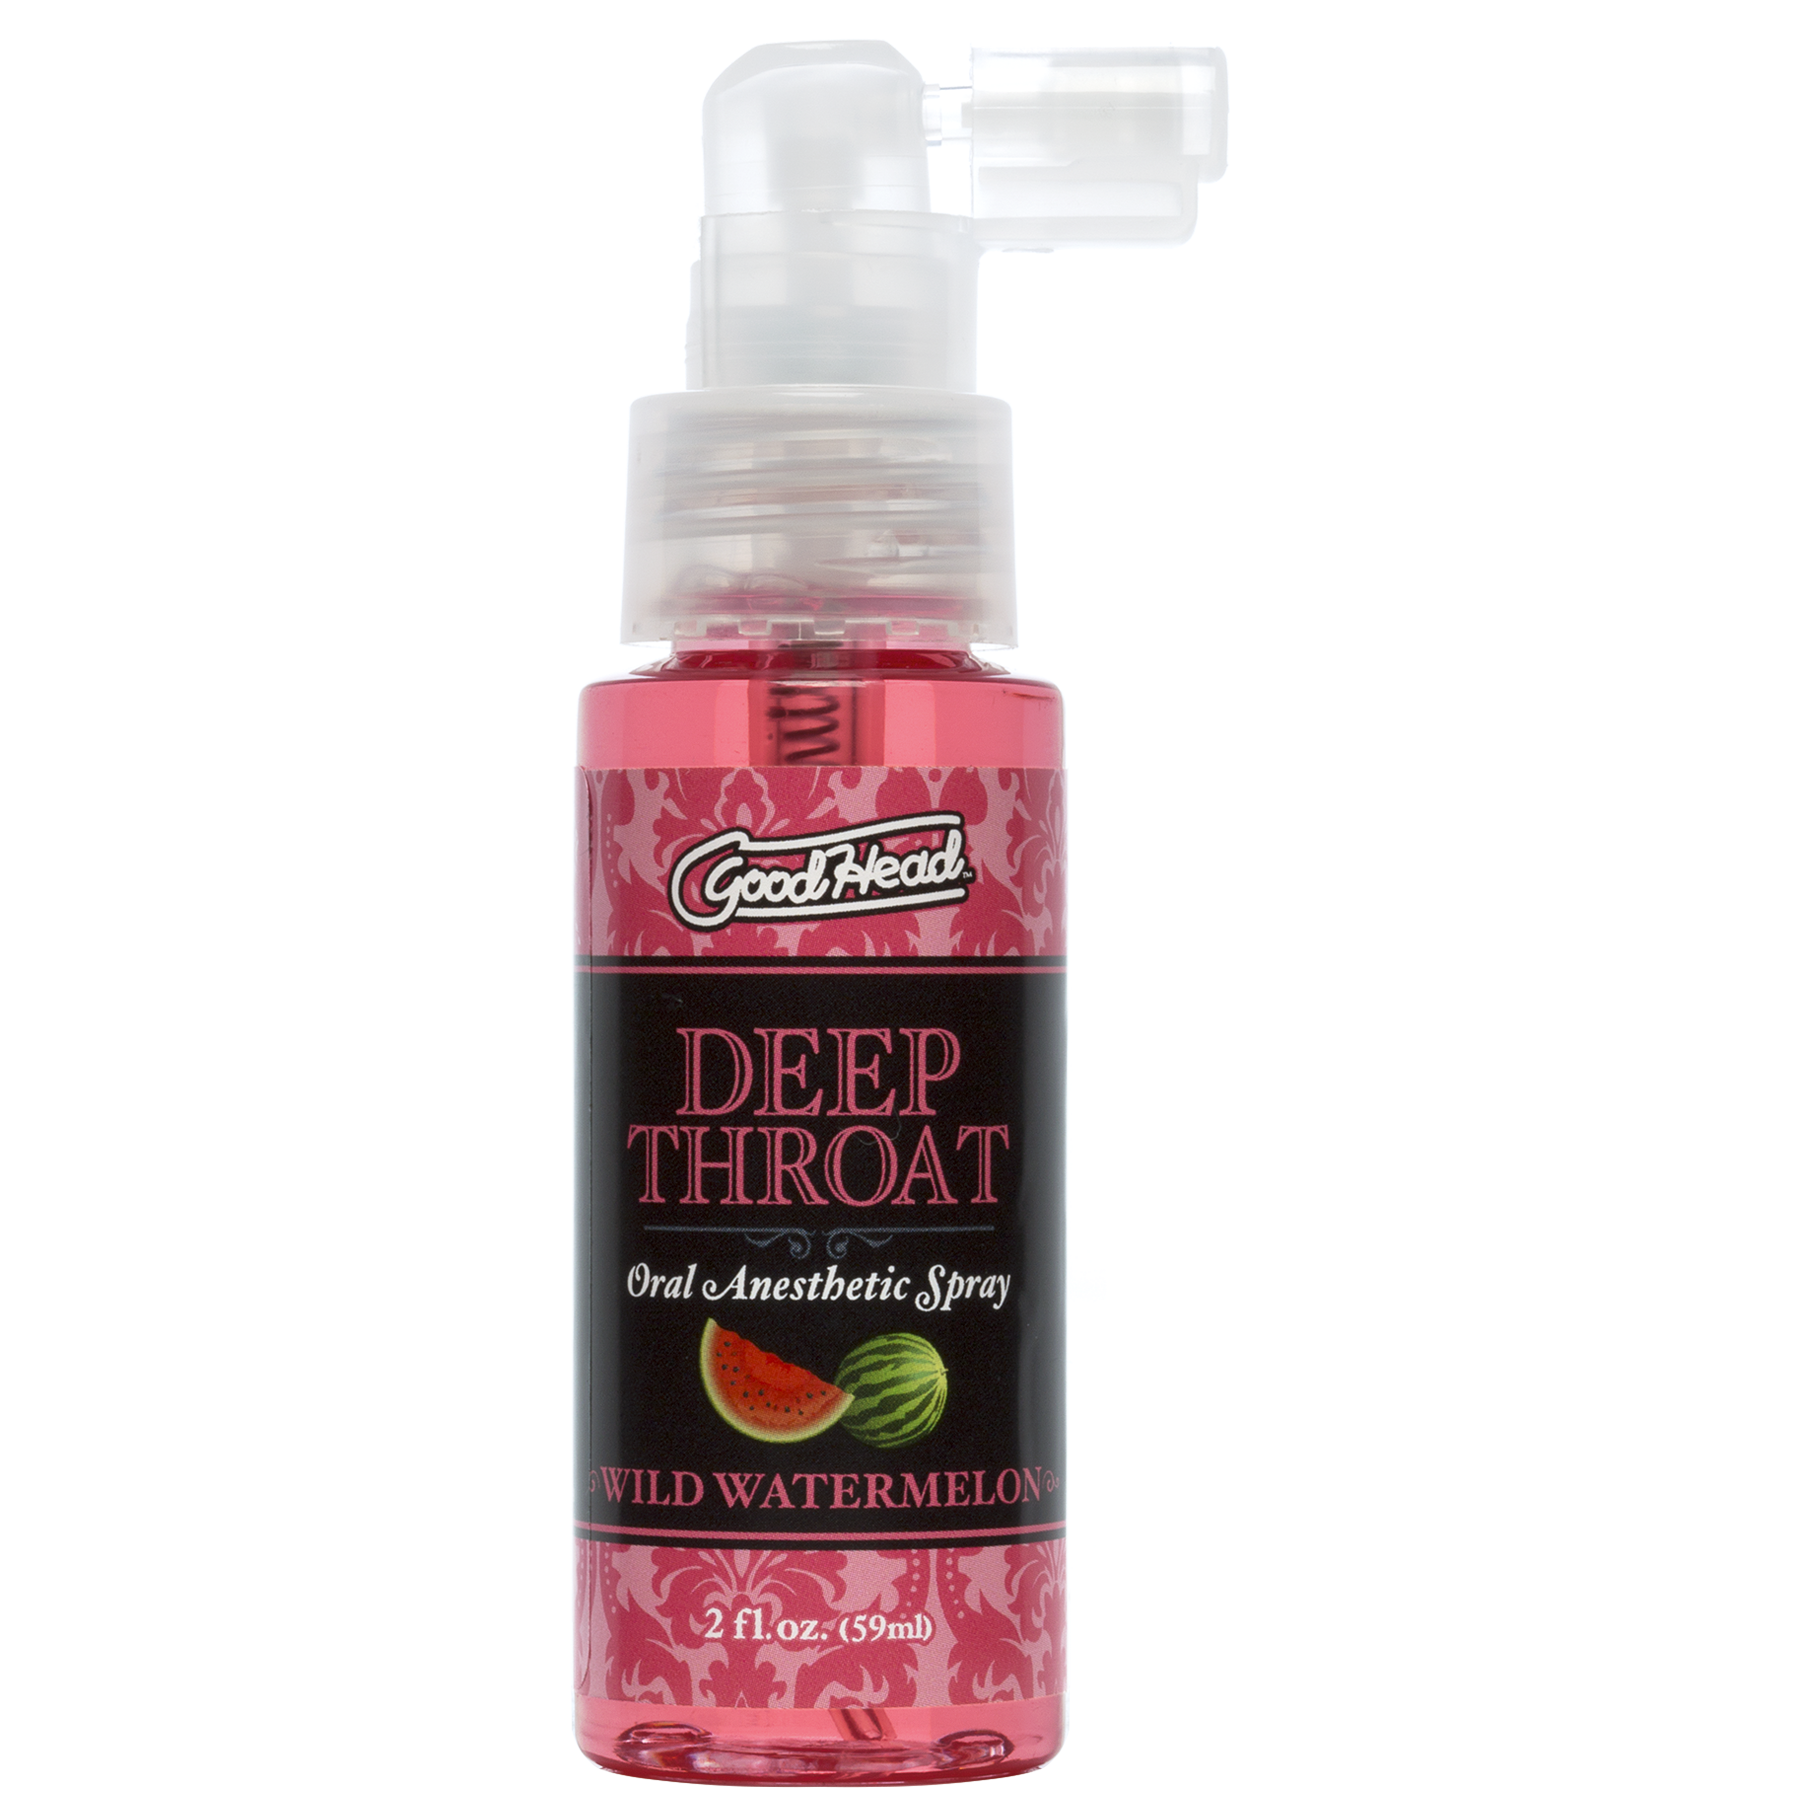 Deep Throat Oral Anesthetic Spray 2oz (watermelon).